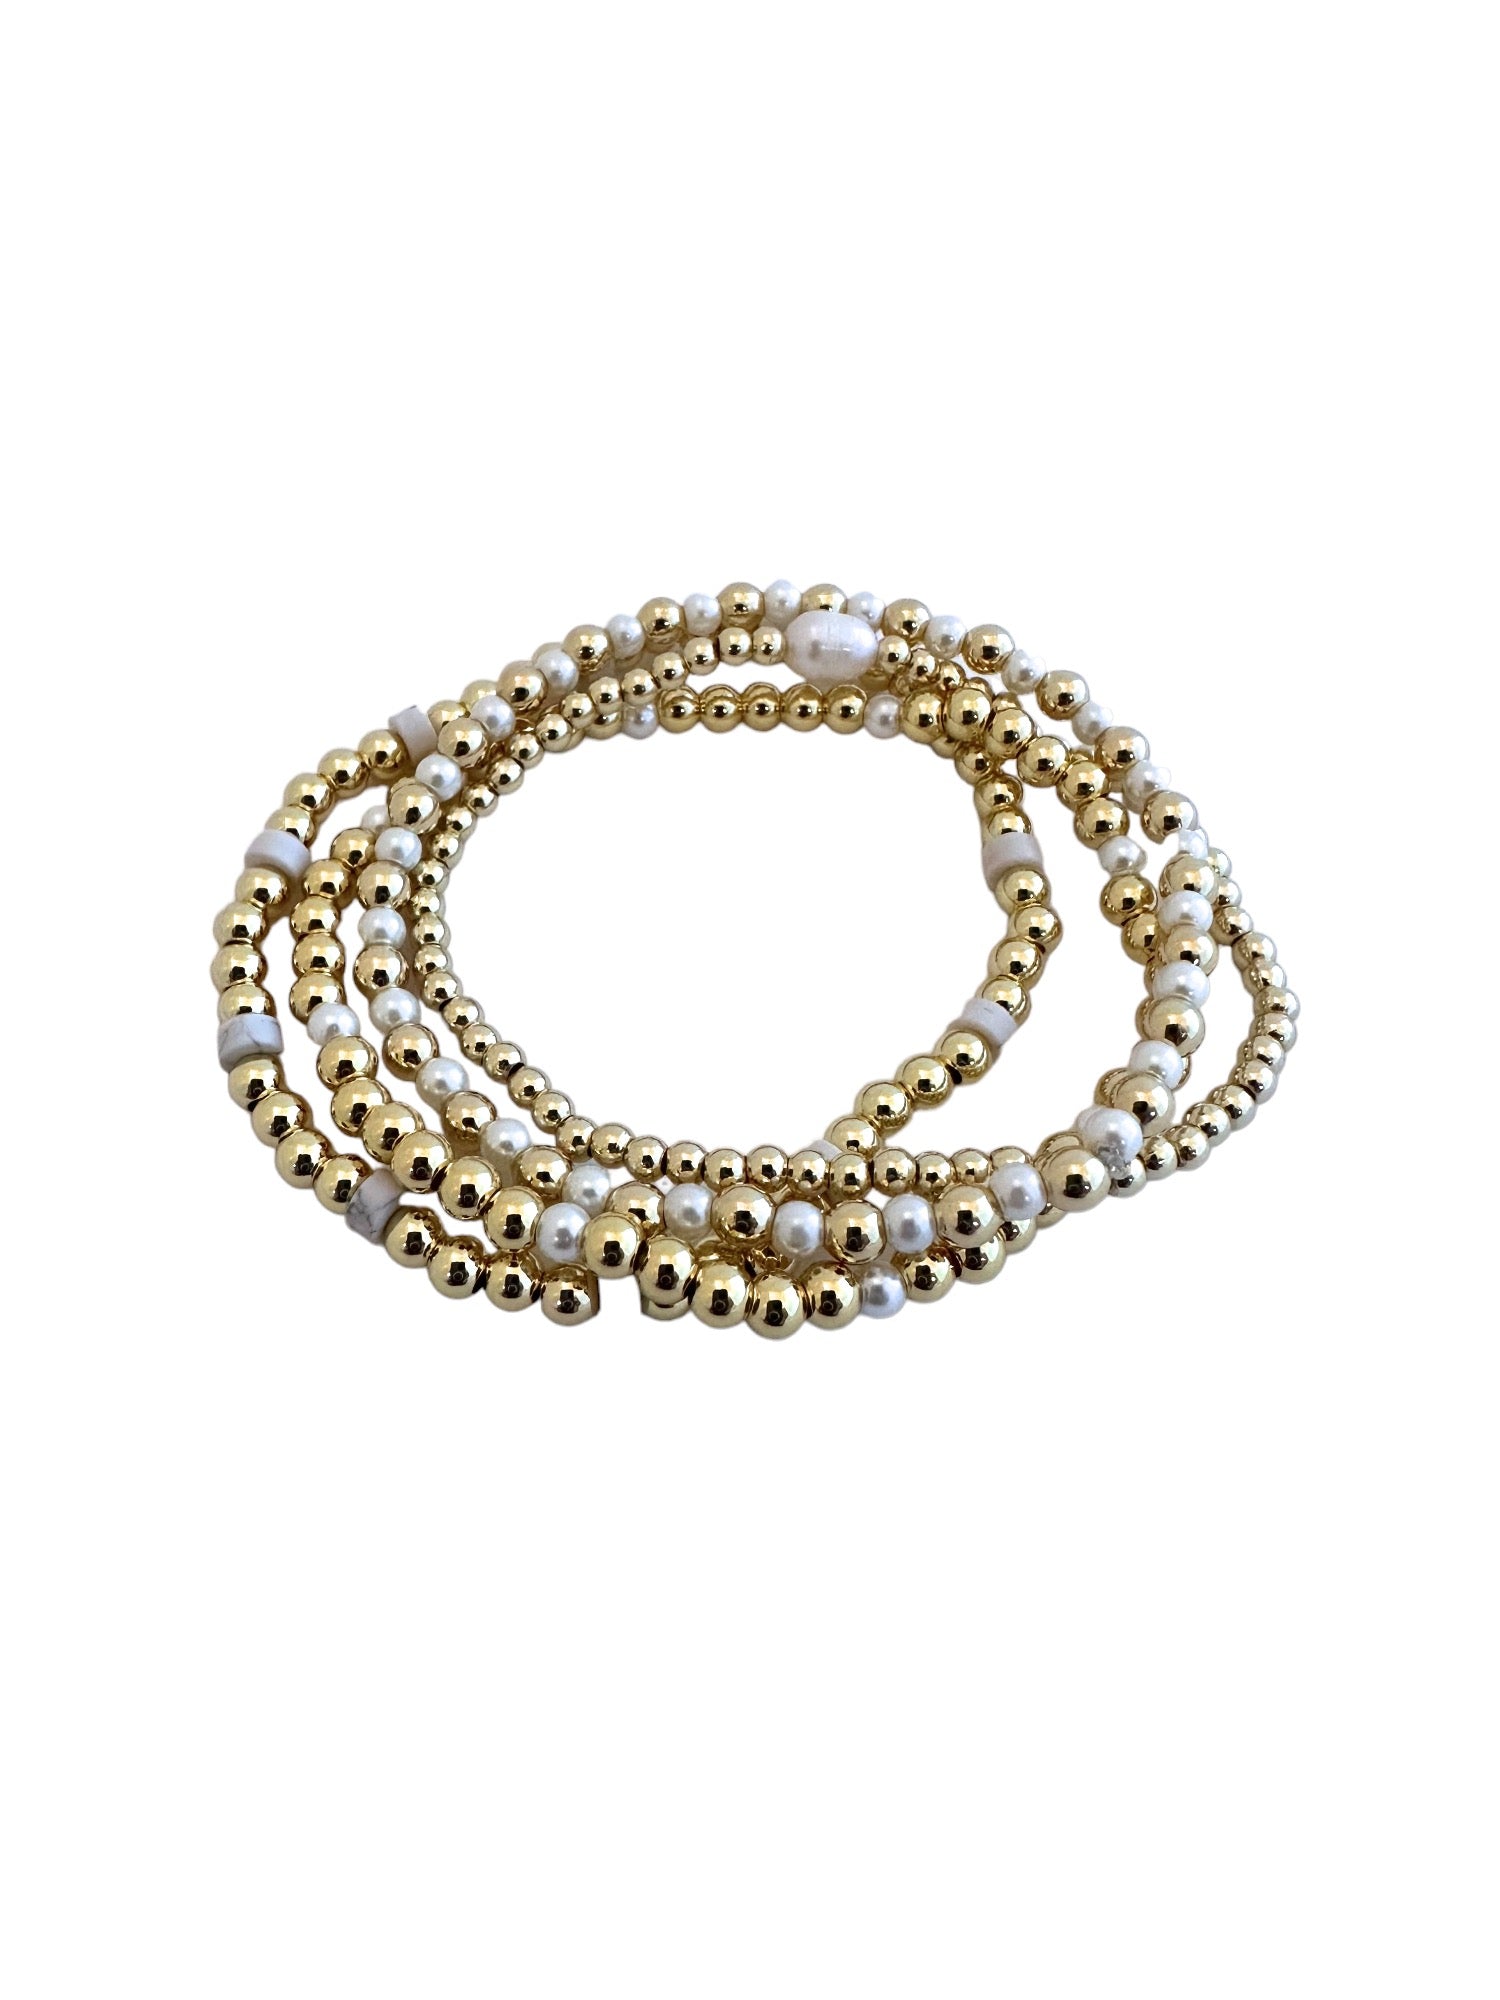 White Pearl Bracelet Set - 4 pieces